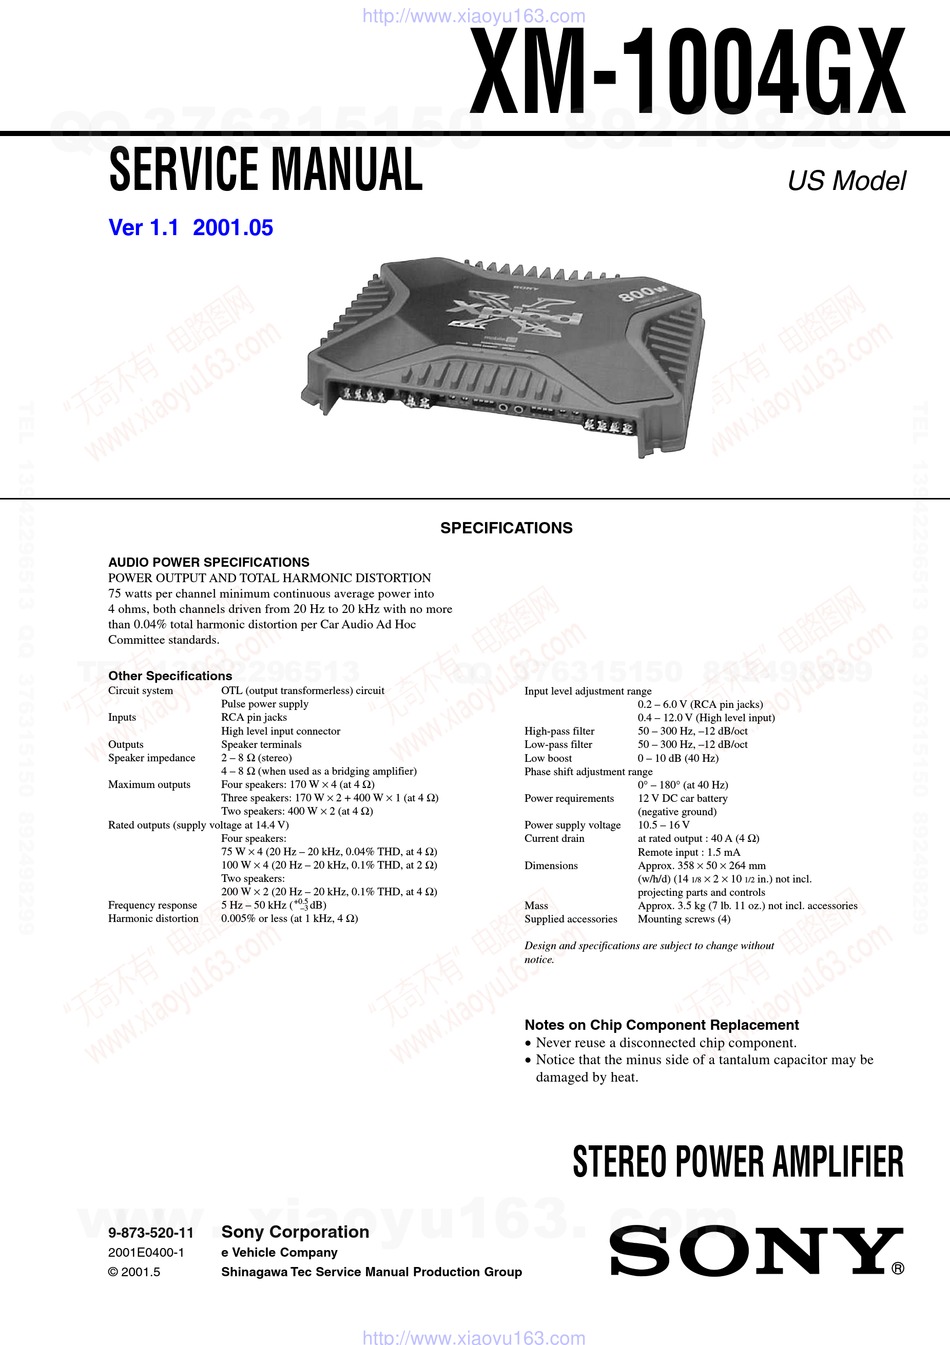 SONY XM-1004GX SERVICE MANUAL Pdf Download | ManualsLib